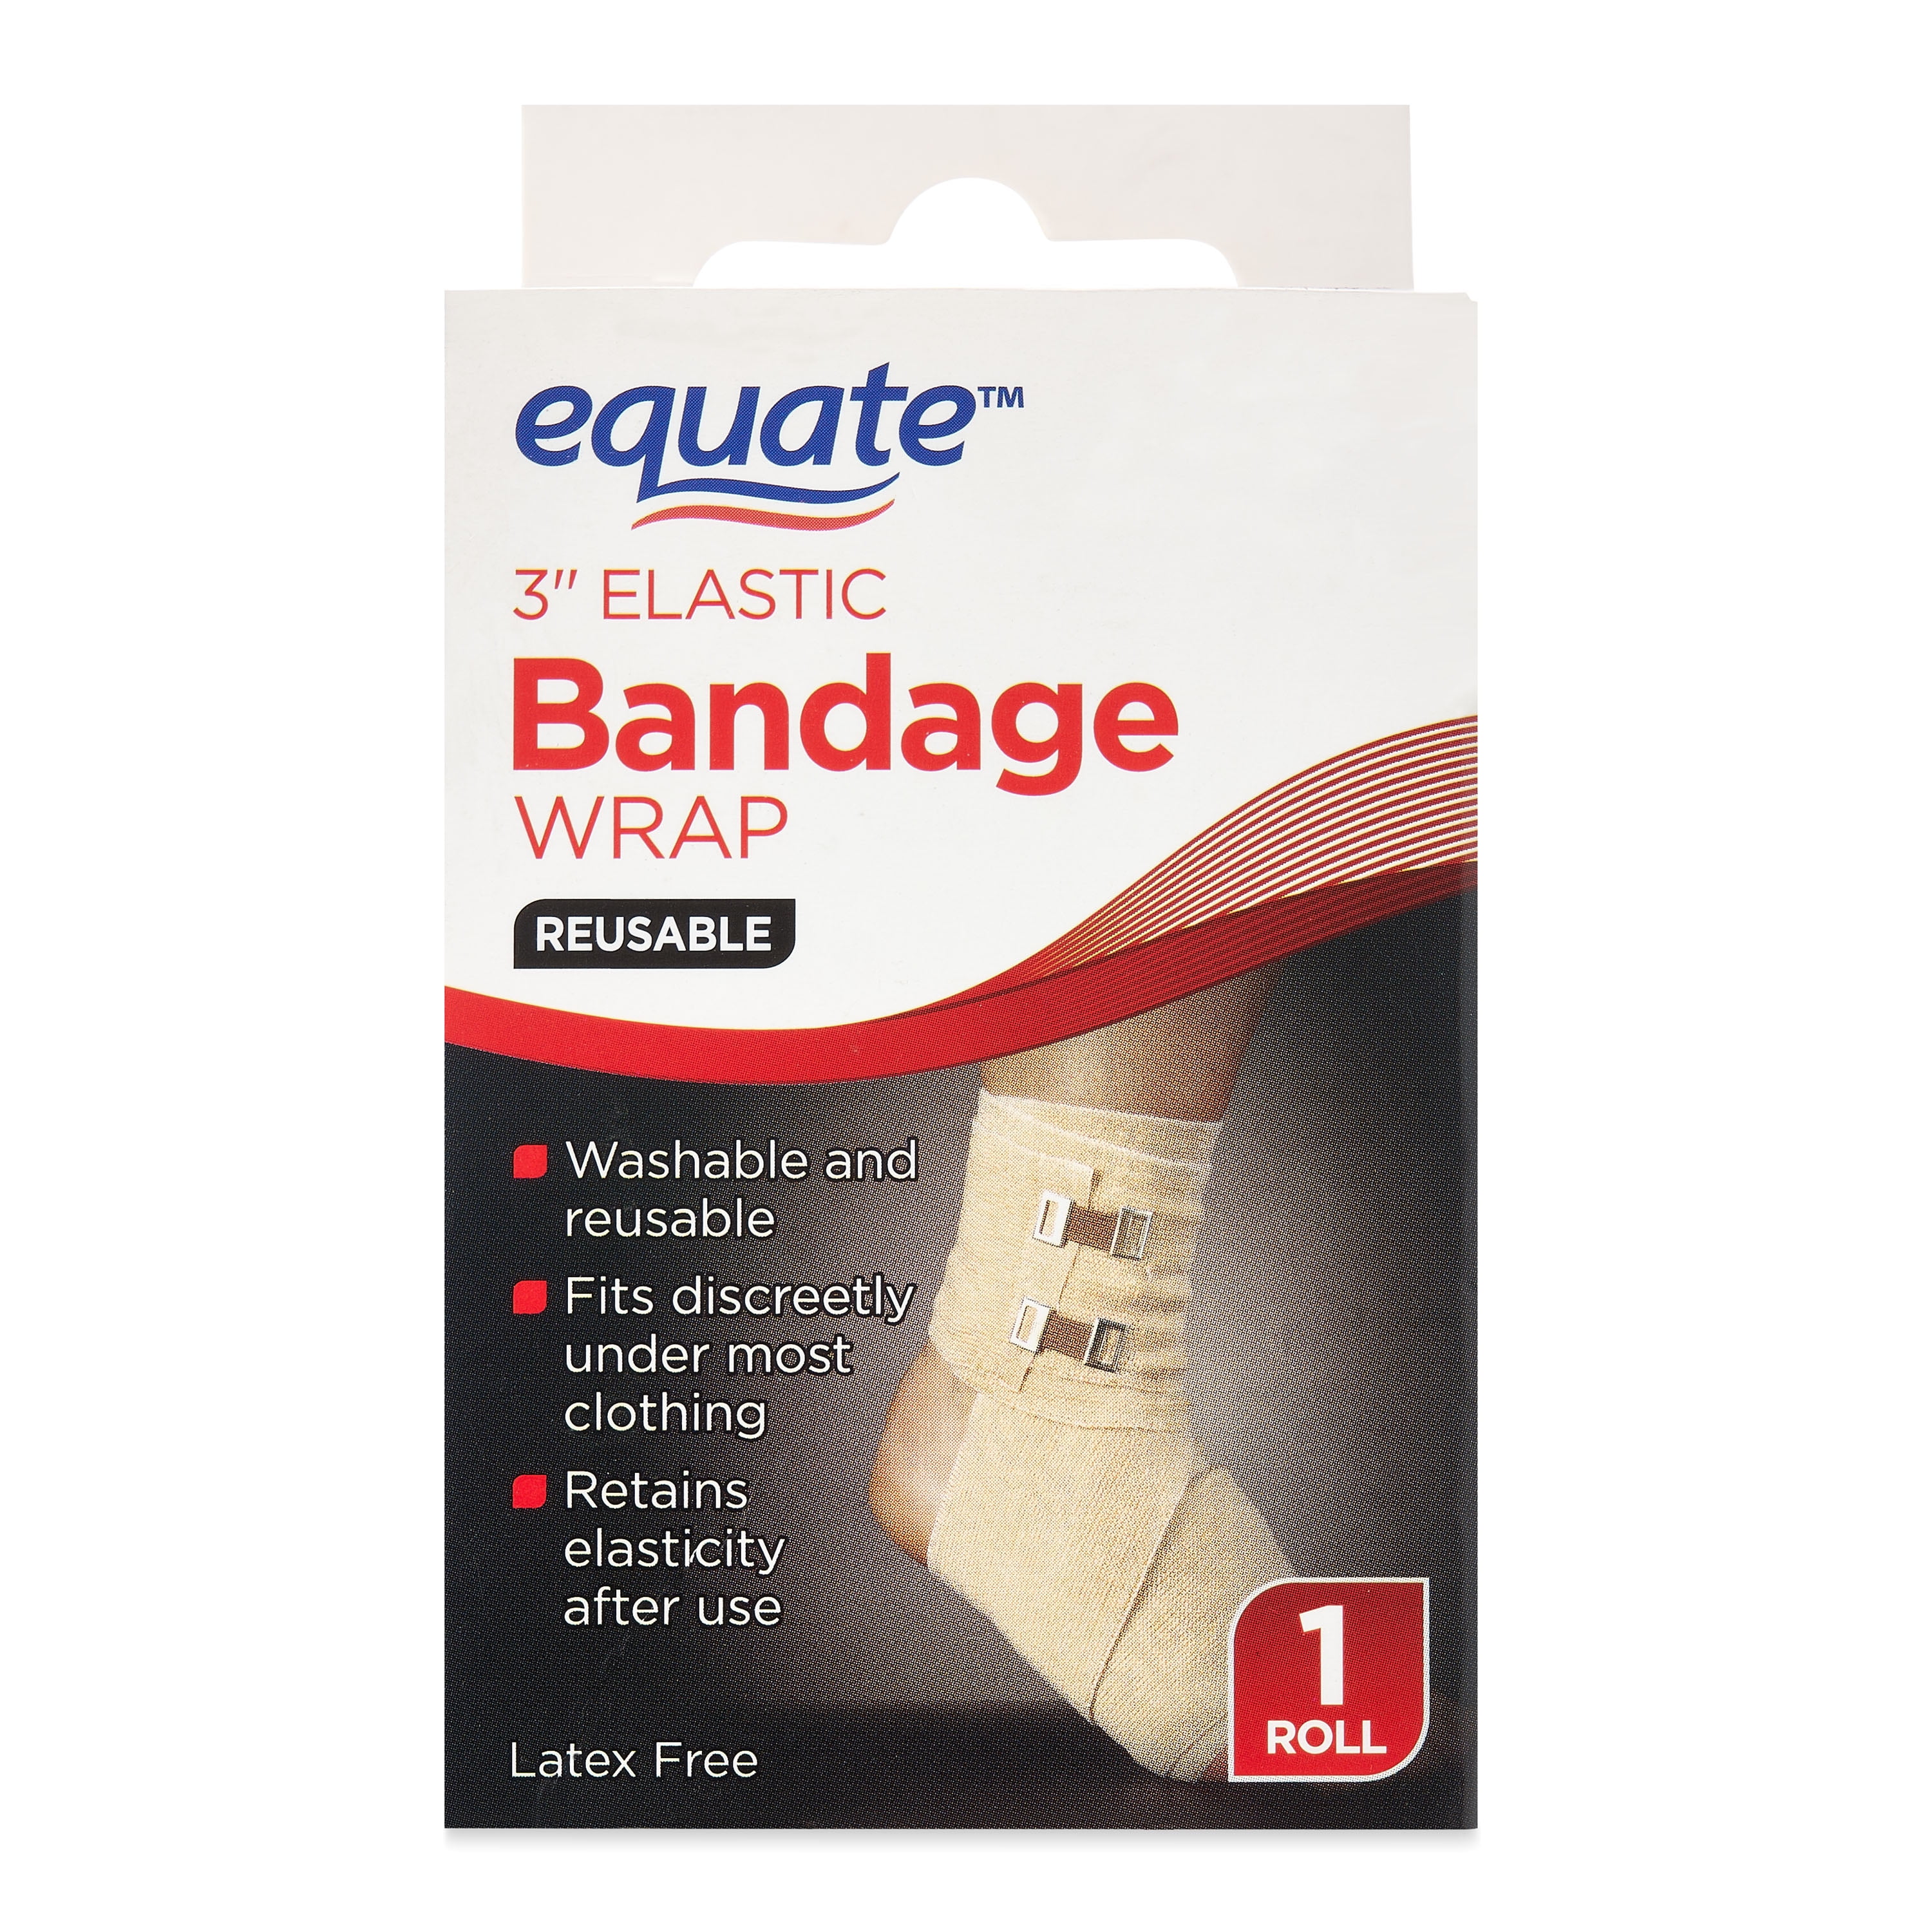 Equate Reusable Elastic Bandage Wrap, 3", Tan